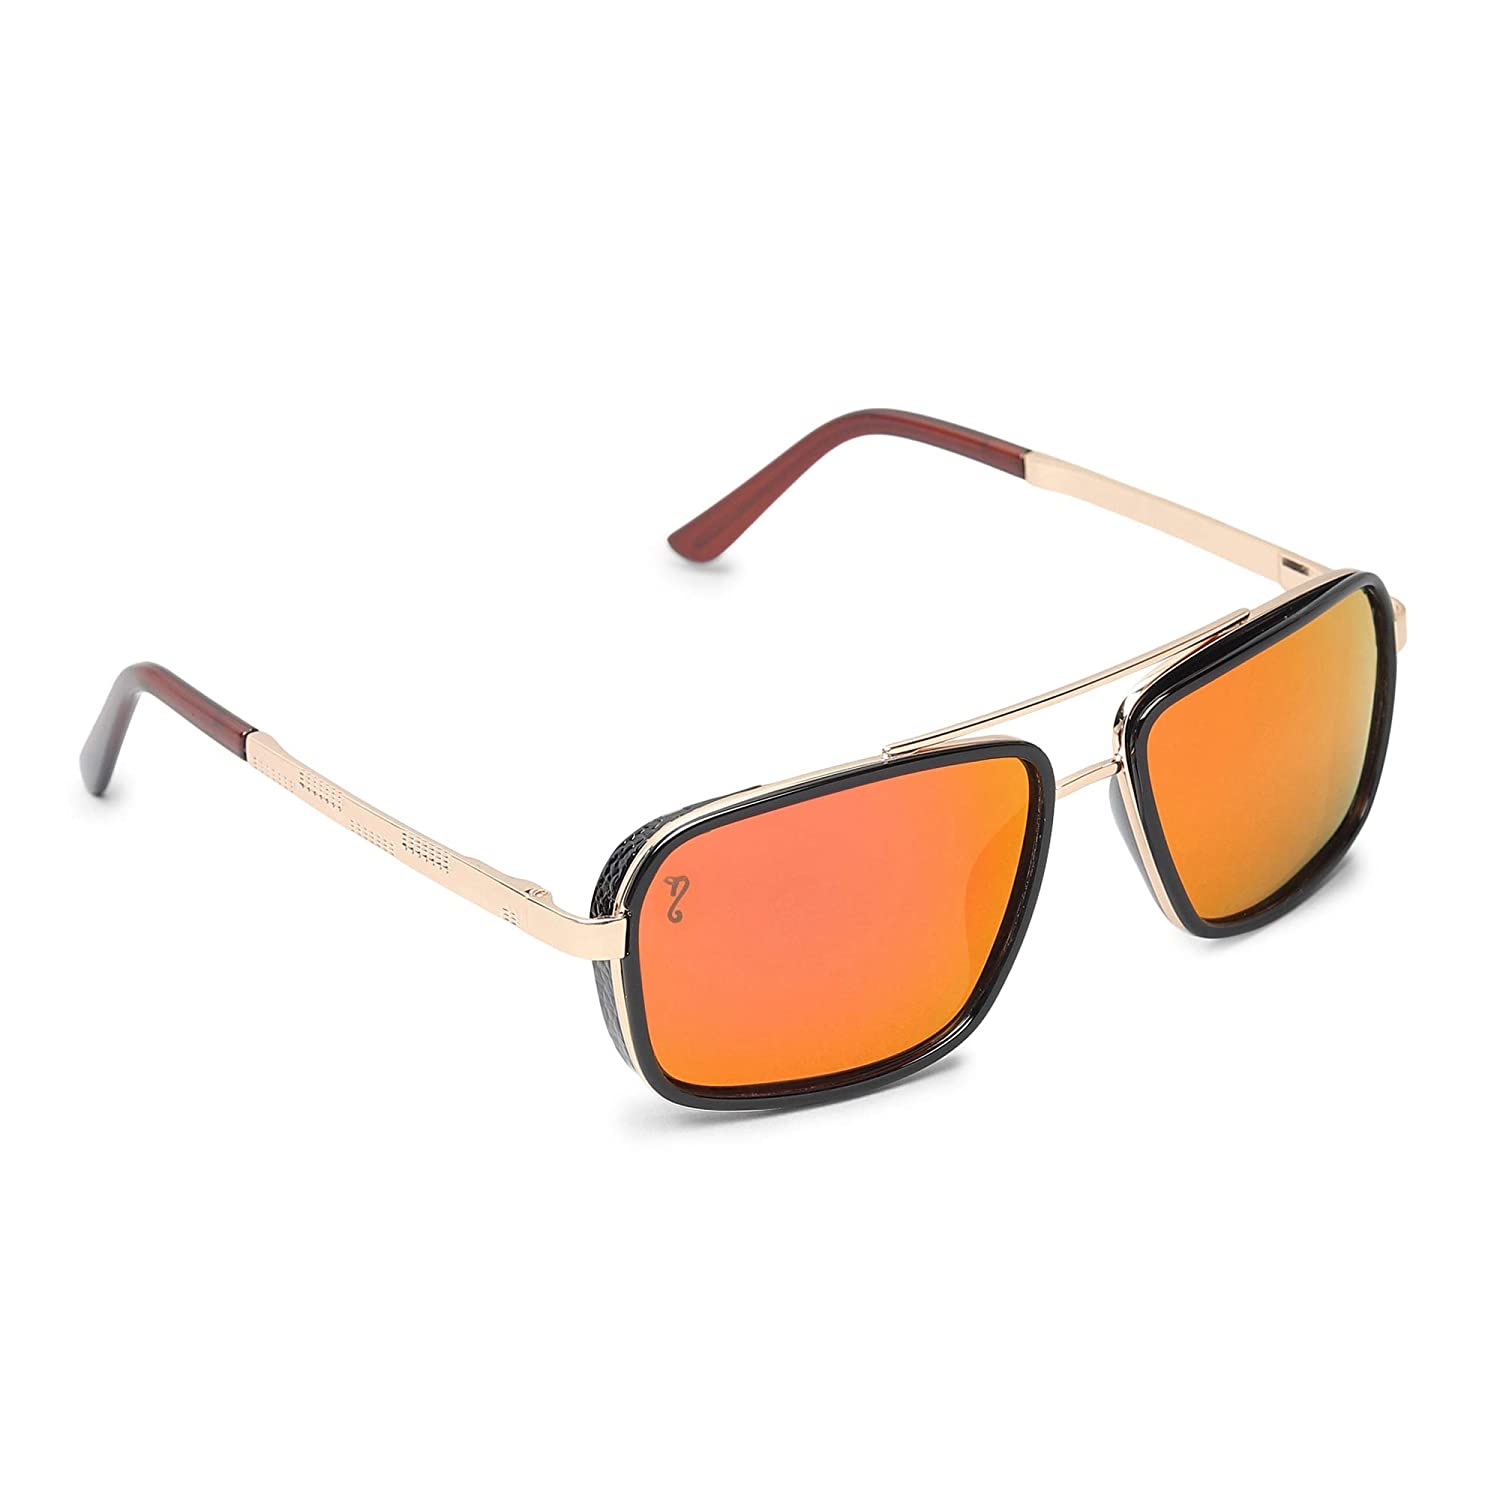 Buy GAINX Rectangular Branded Latest and Stylish Sunglasses, 100% UV  Protected, Men & Women, Medium